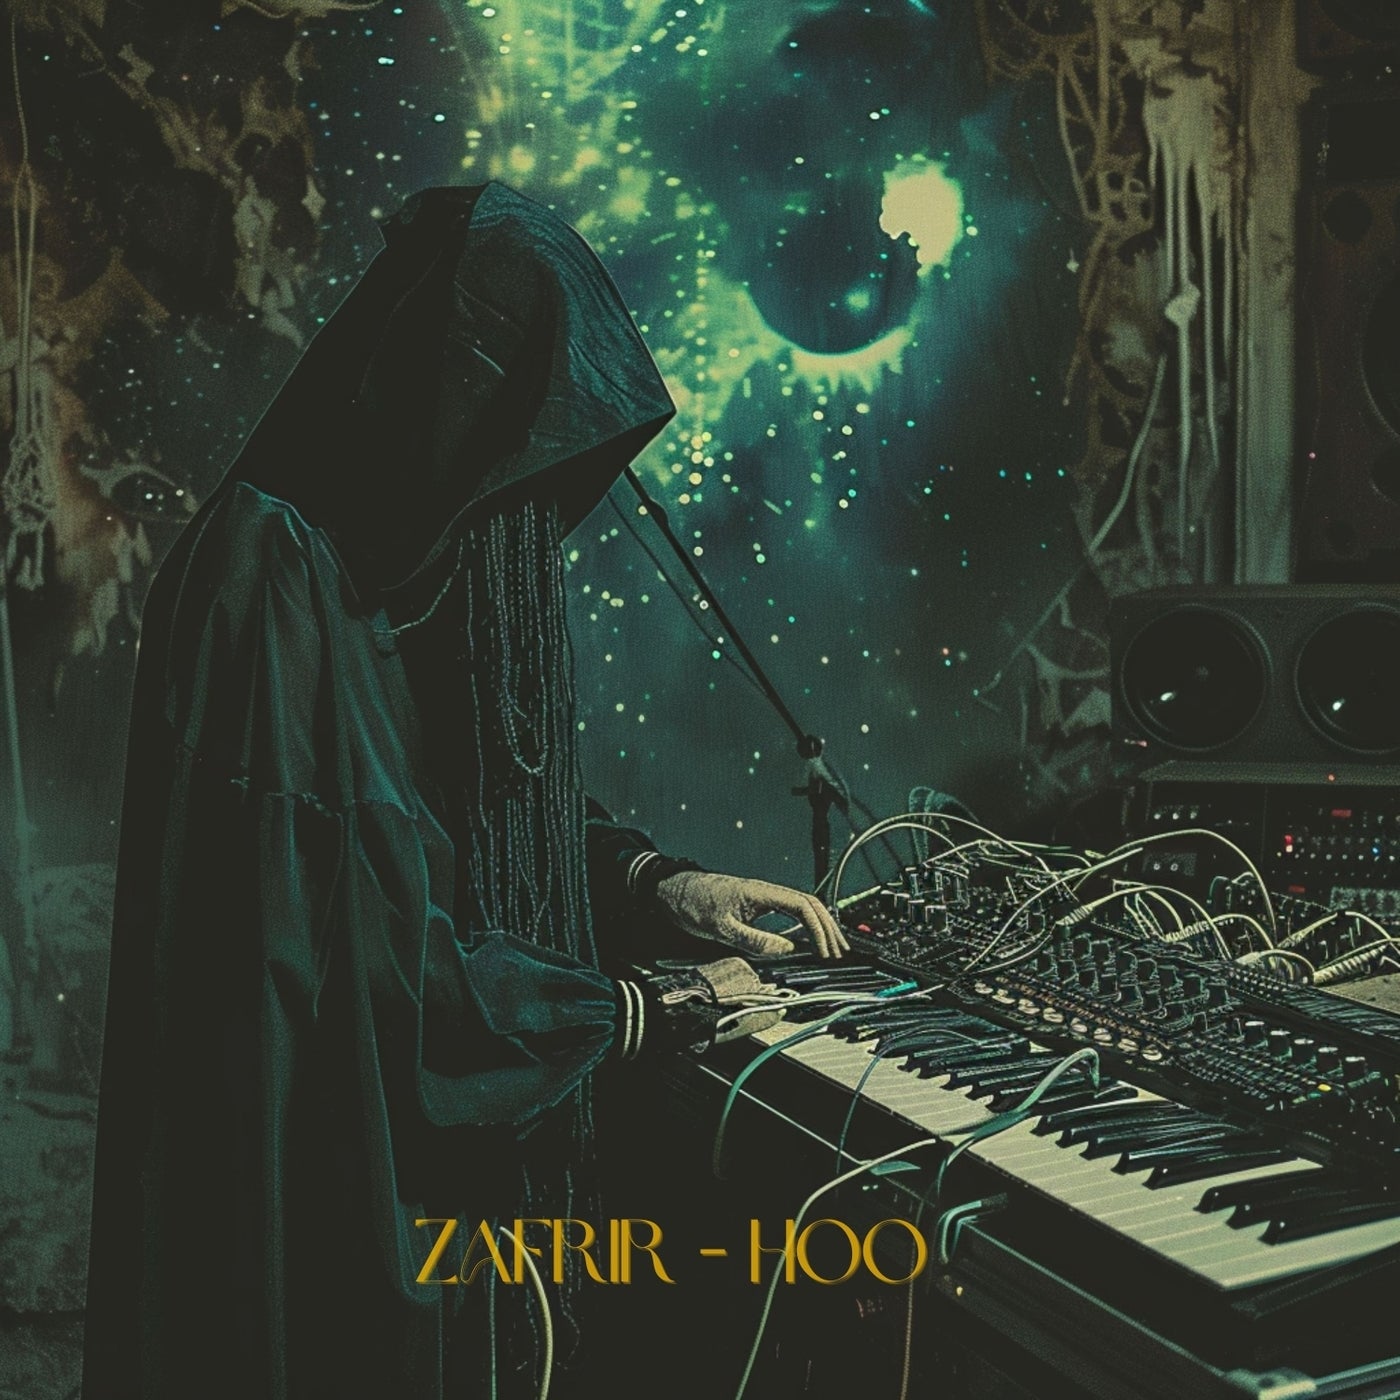 image cover: Zafrir - HOO on ZAF RECORDS